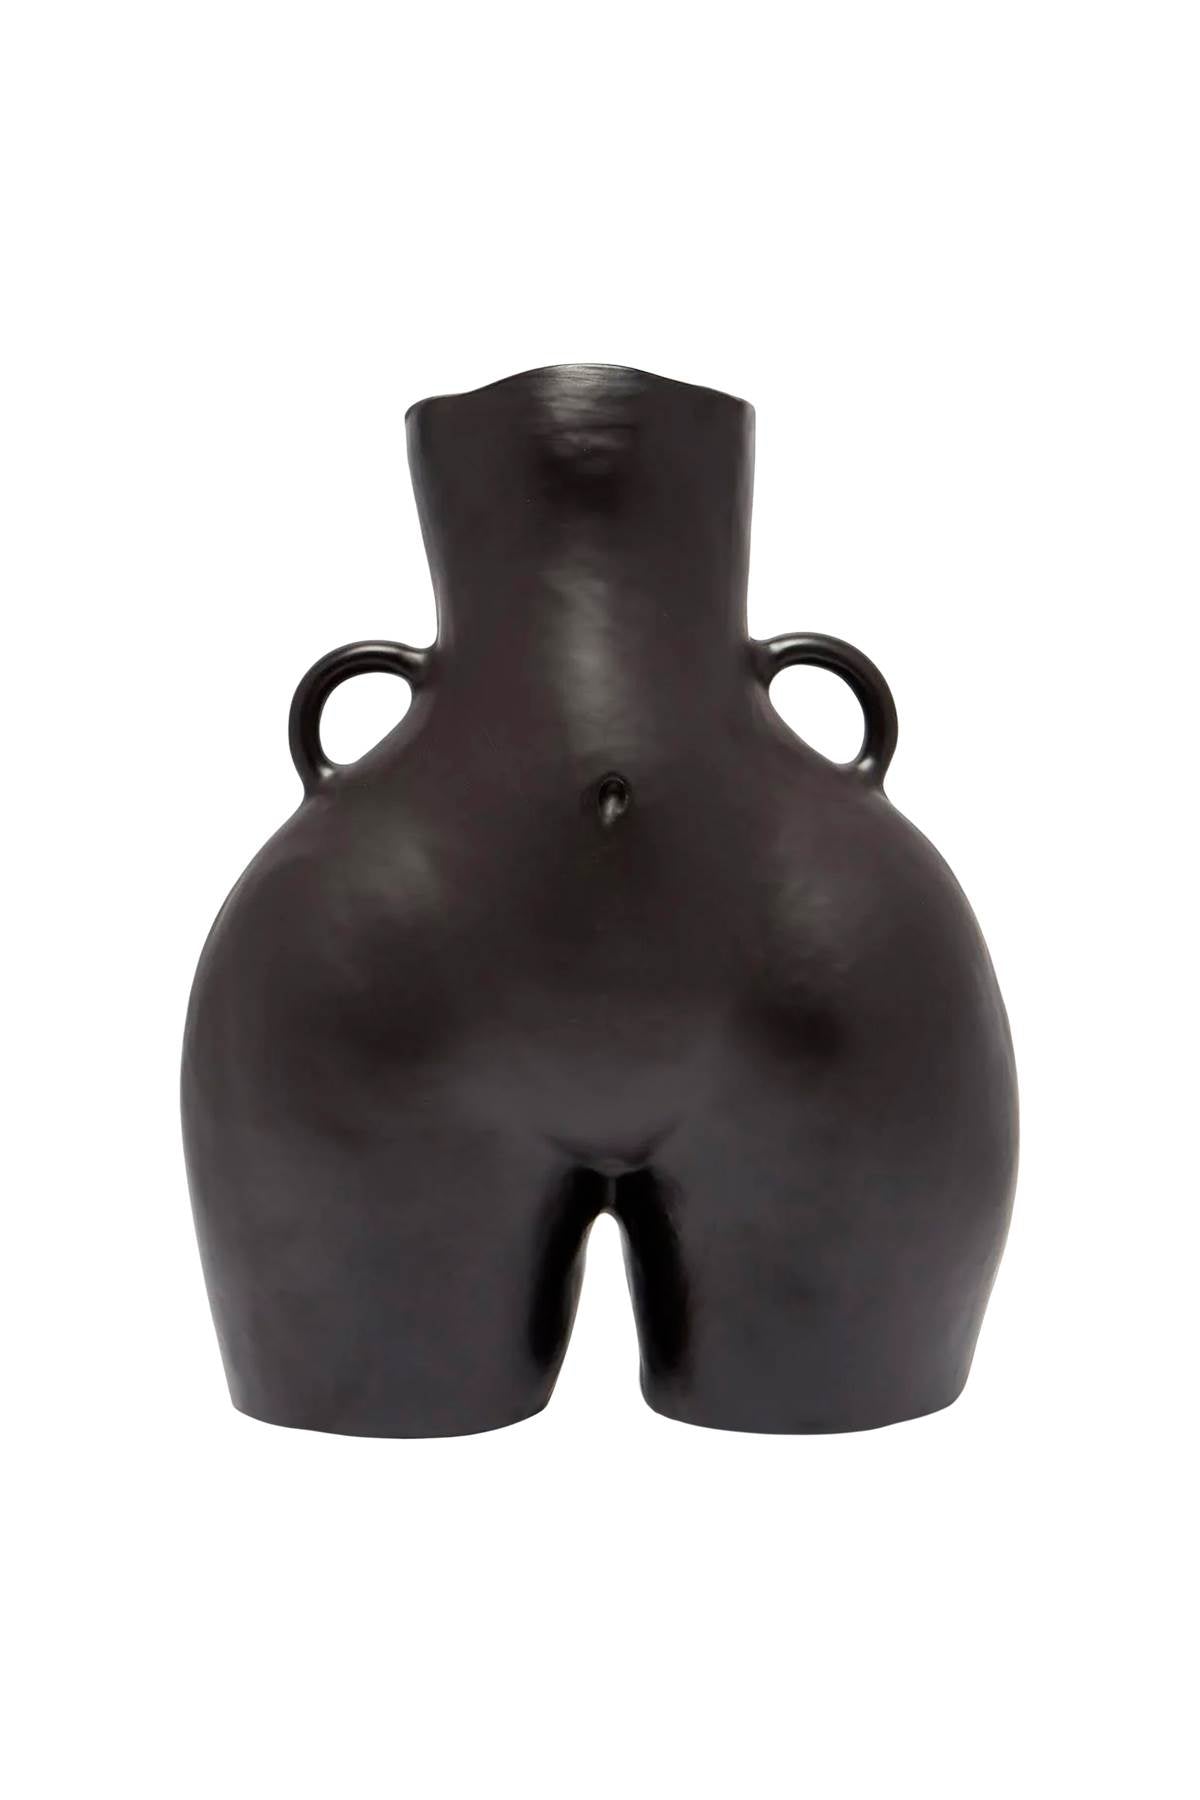 Anissa kermiche 'love handles' vase-0